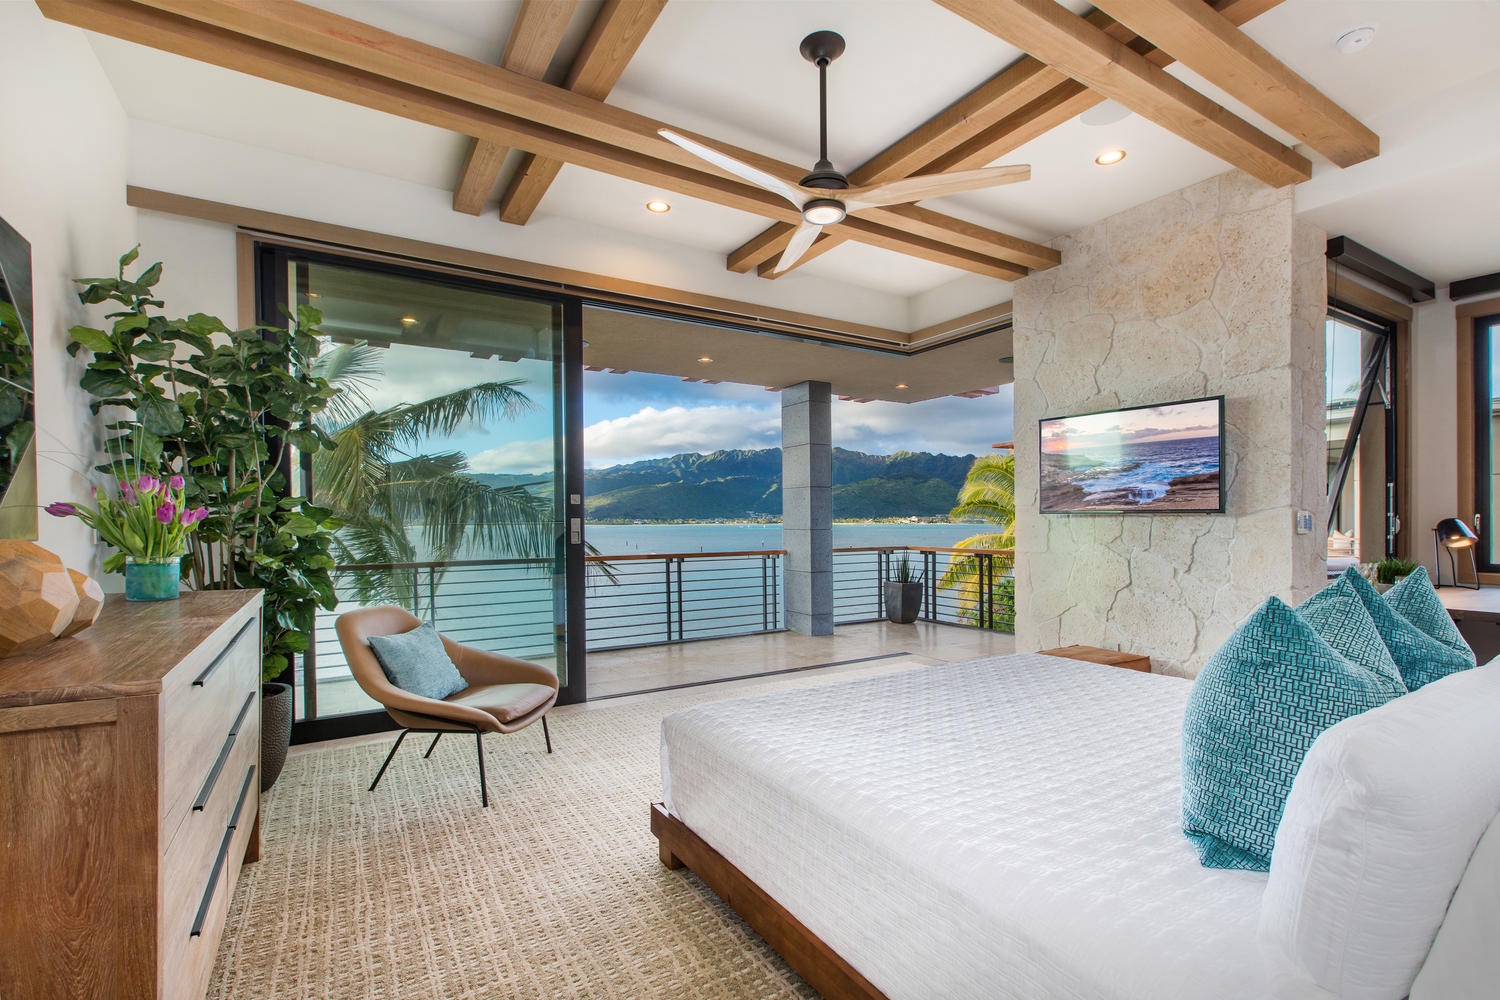 Honolulu Vacation Rentals, Ocean House - Second primary bedroom suite.